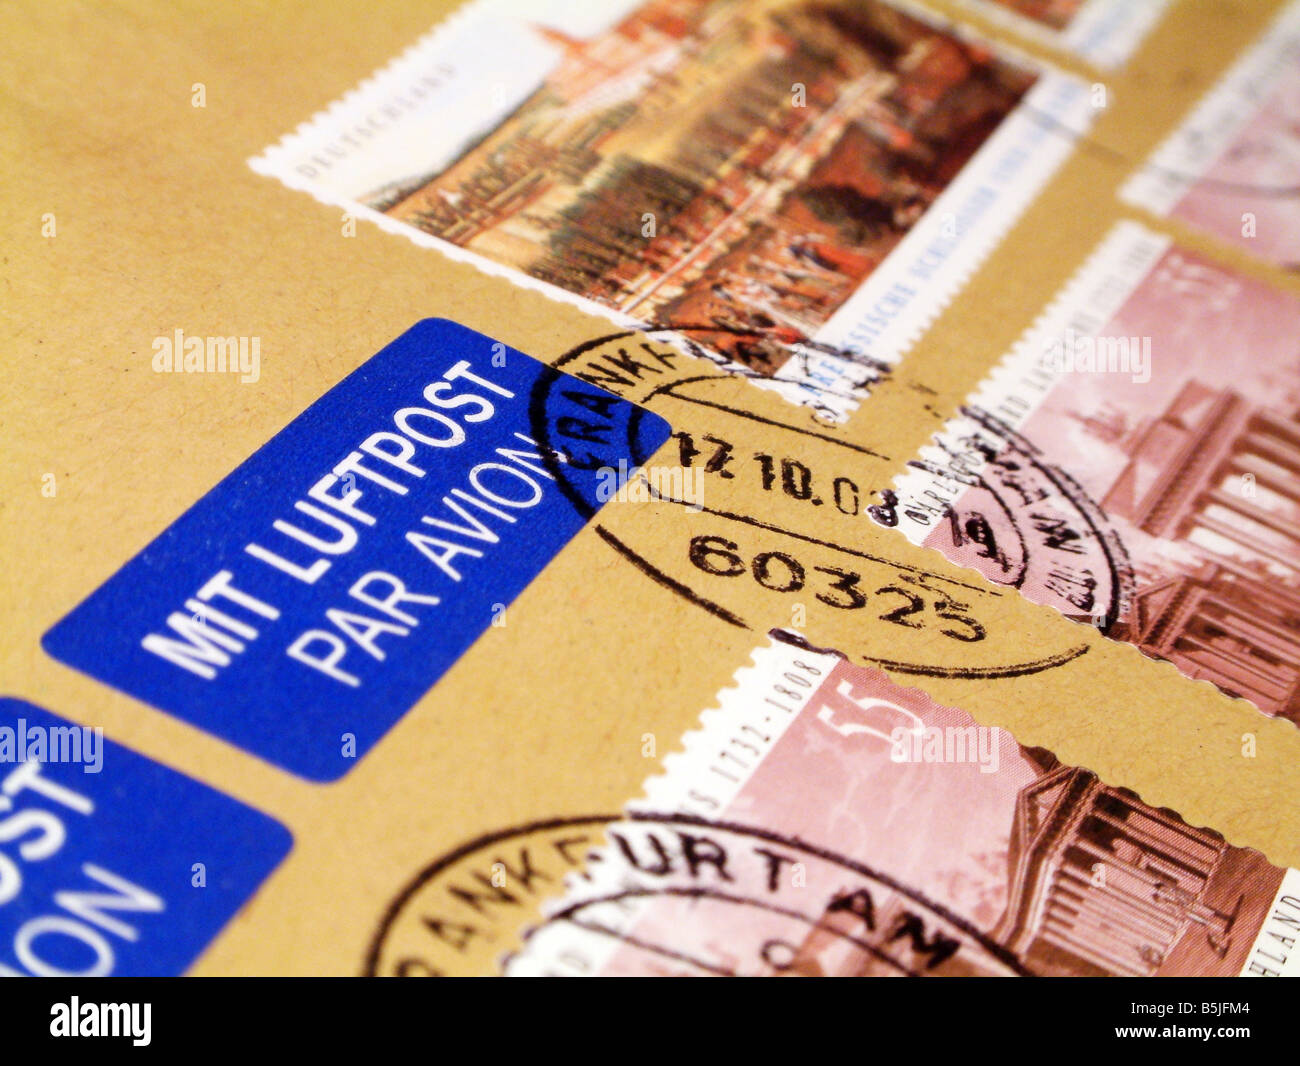 German Postage Stamps and Frankfurt Date Stamp Stock Photo